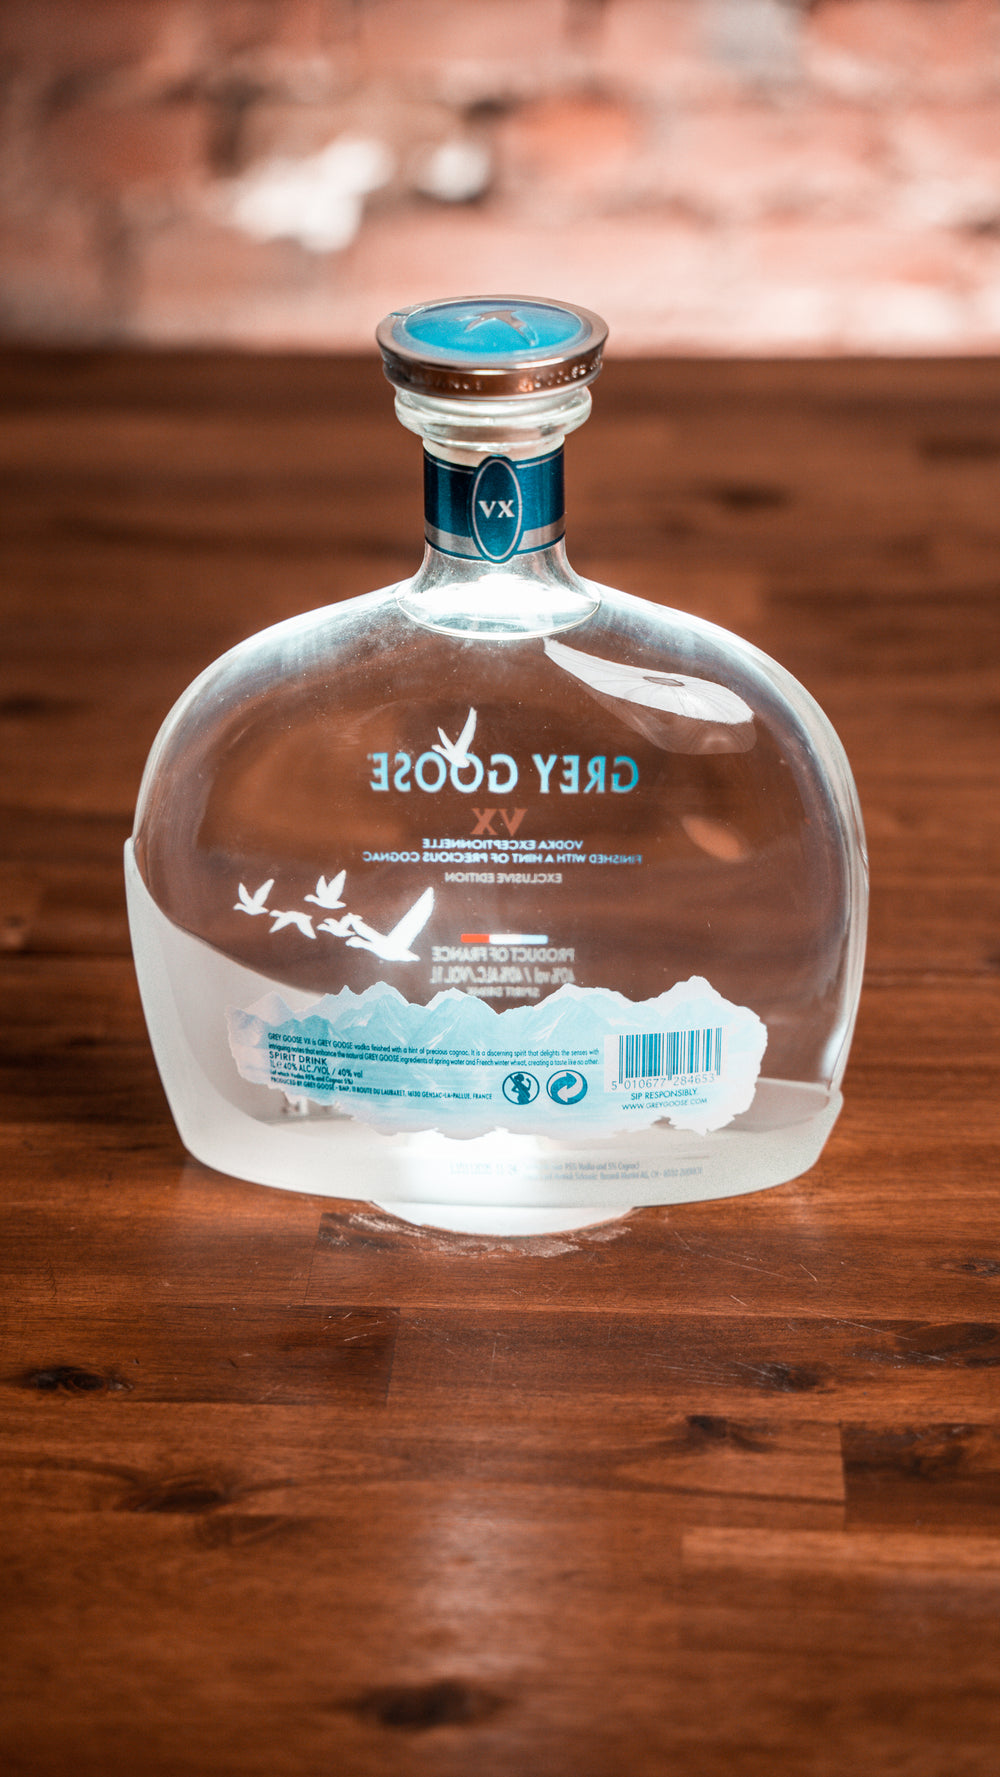 Grey Goose Vodka VX 40% 1l - Spirituosengalerie